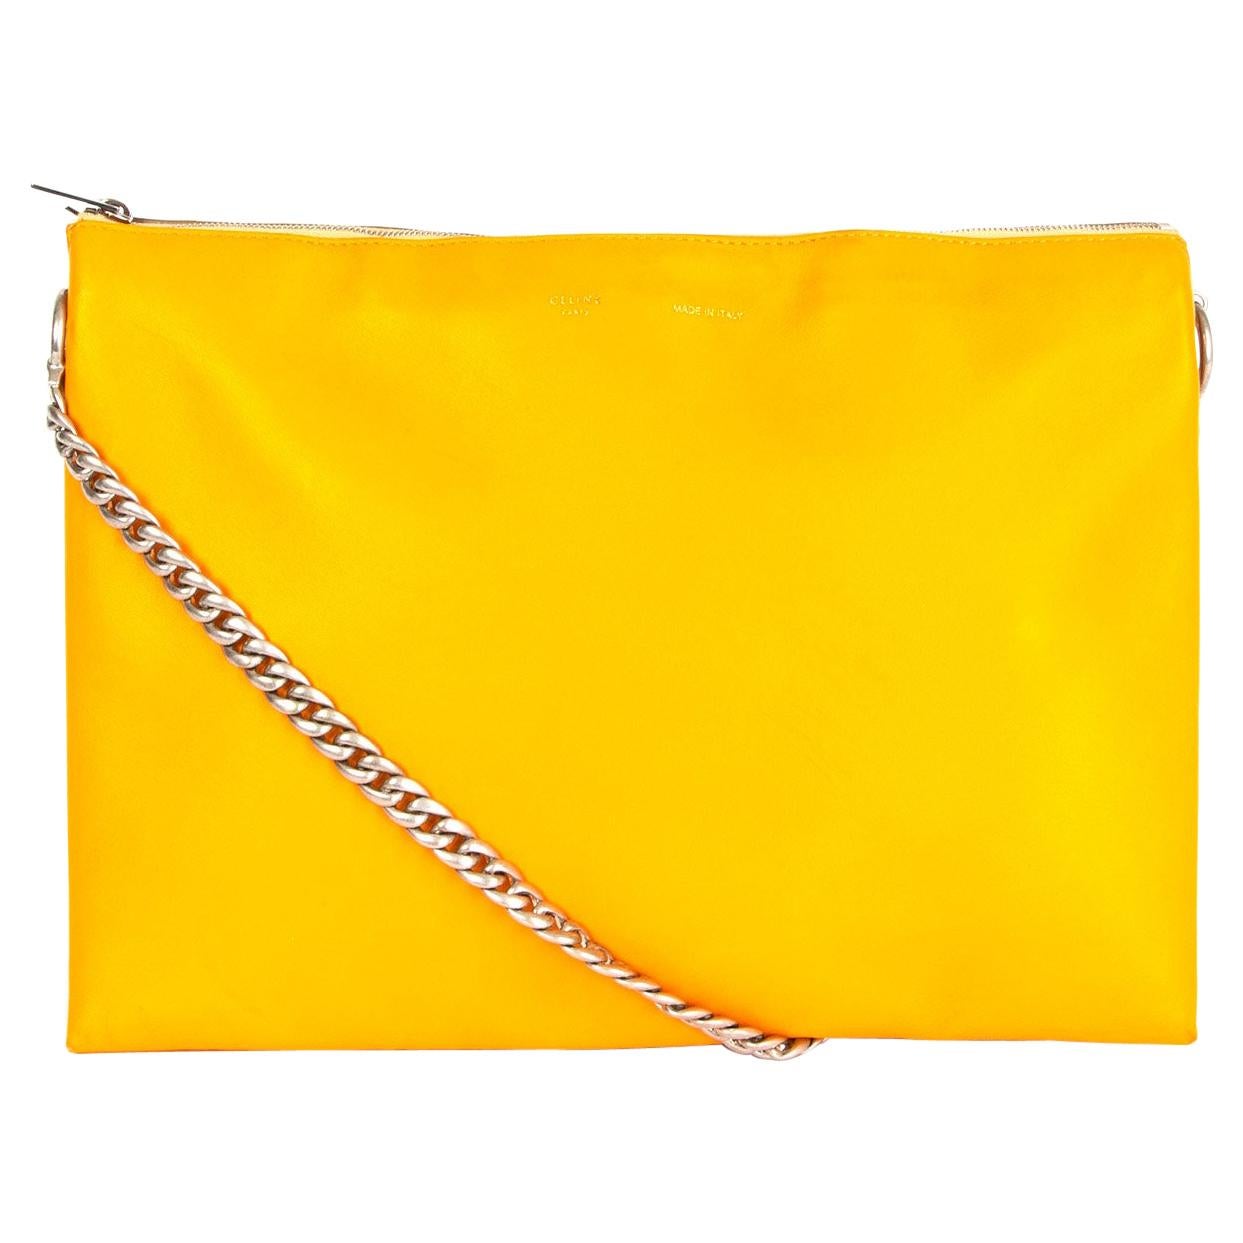 CELINE orange yellow leather TRICOLOR TRIO CHAIN Clutch Shoulder Bag For Sale